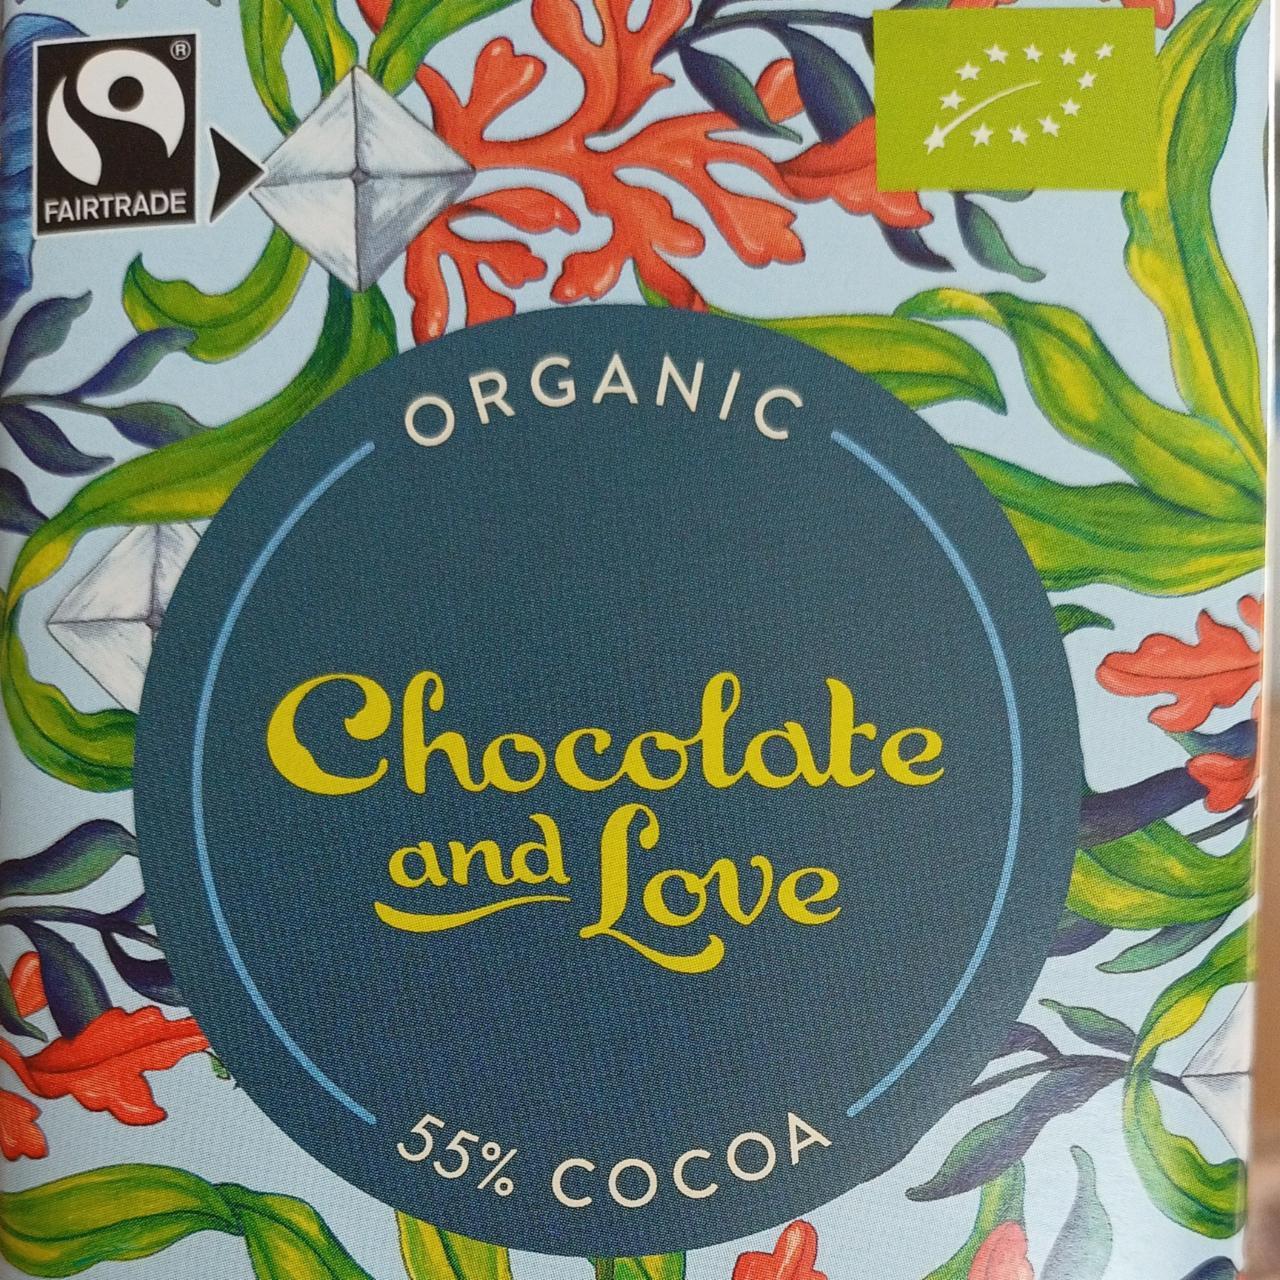 Fotografie - Chocolate and love 55% cocoa sea salt and caramel Fairtrade